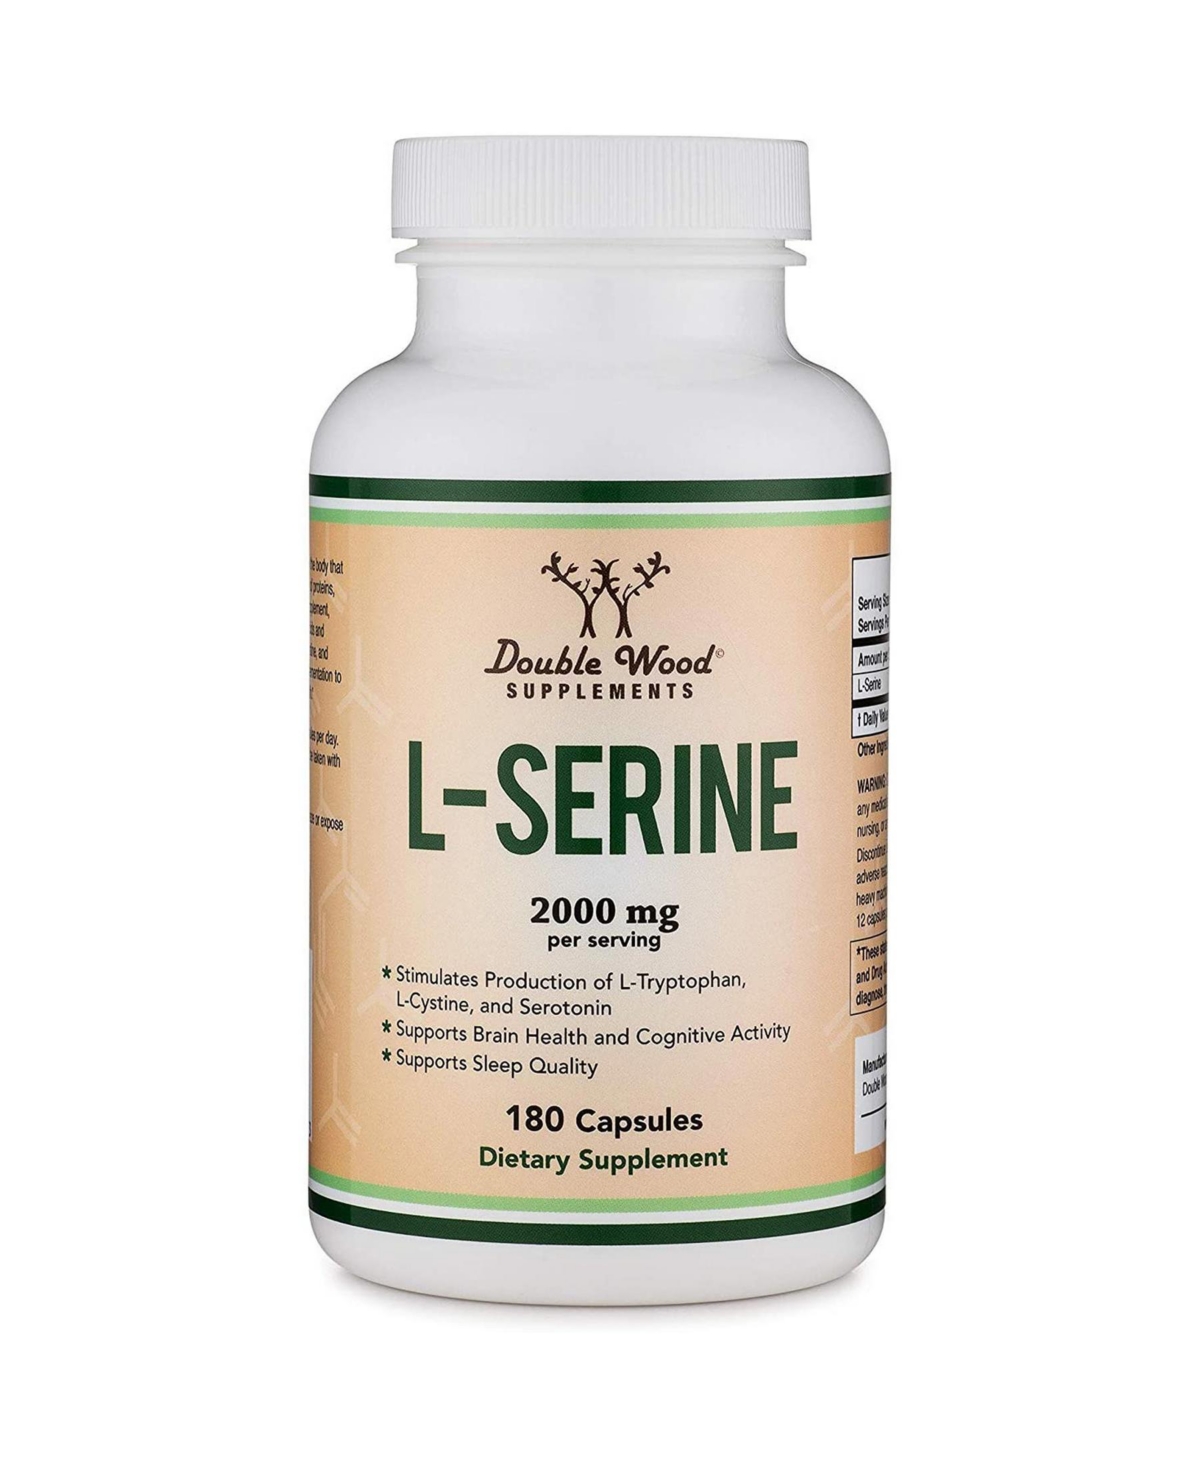 L-Serine - 180 capsules, 2000 mg servings